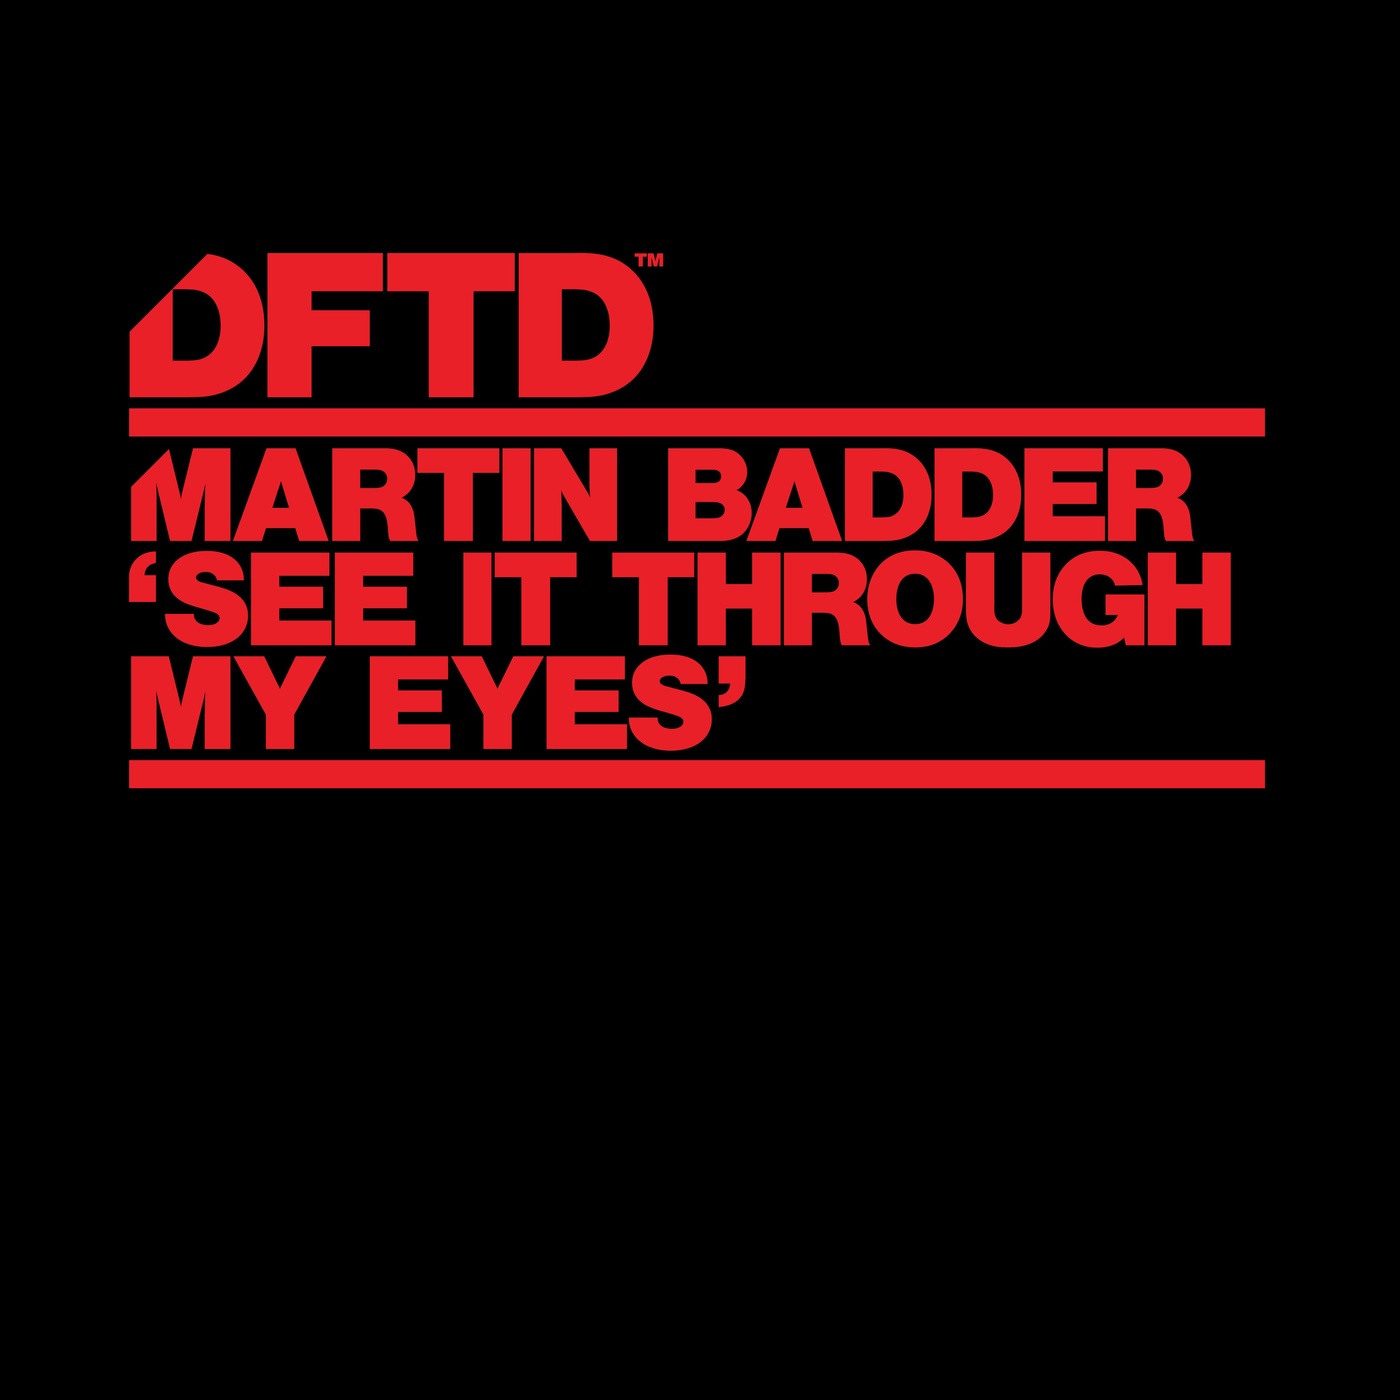 Martin Badder - See It Through My Eyes / DFTD